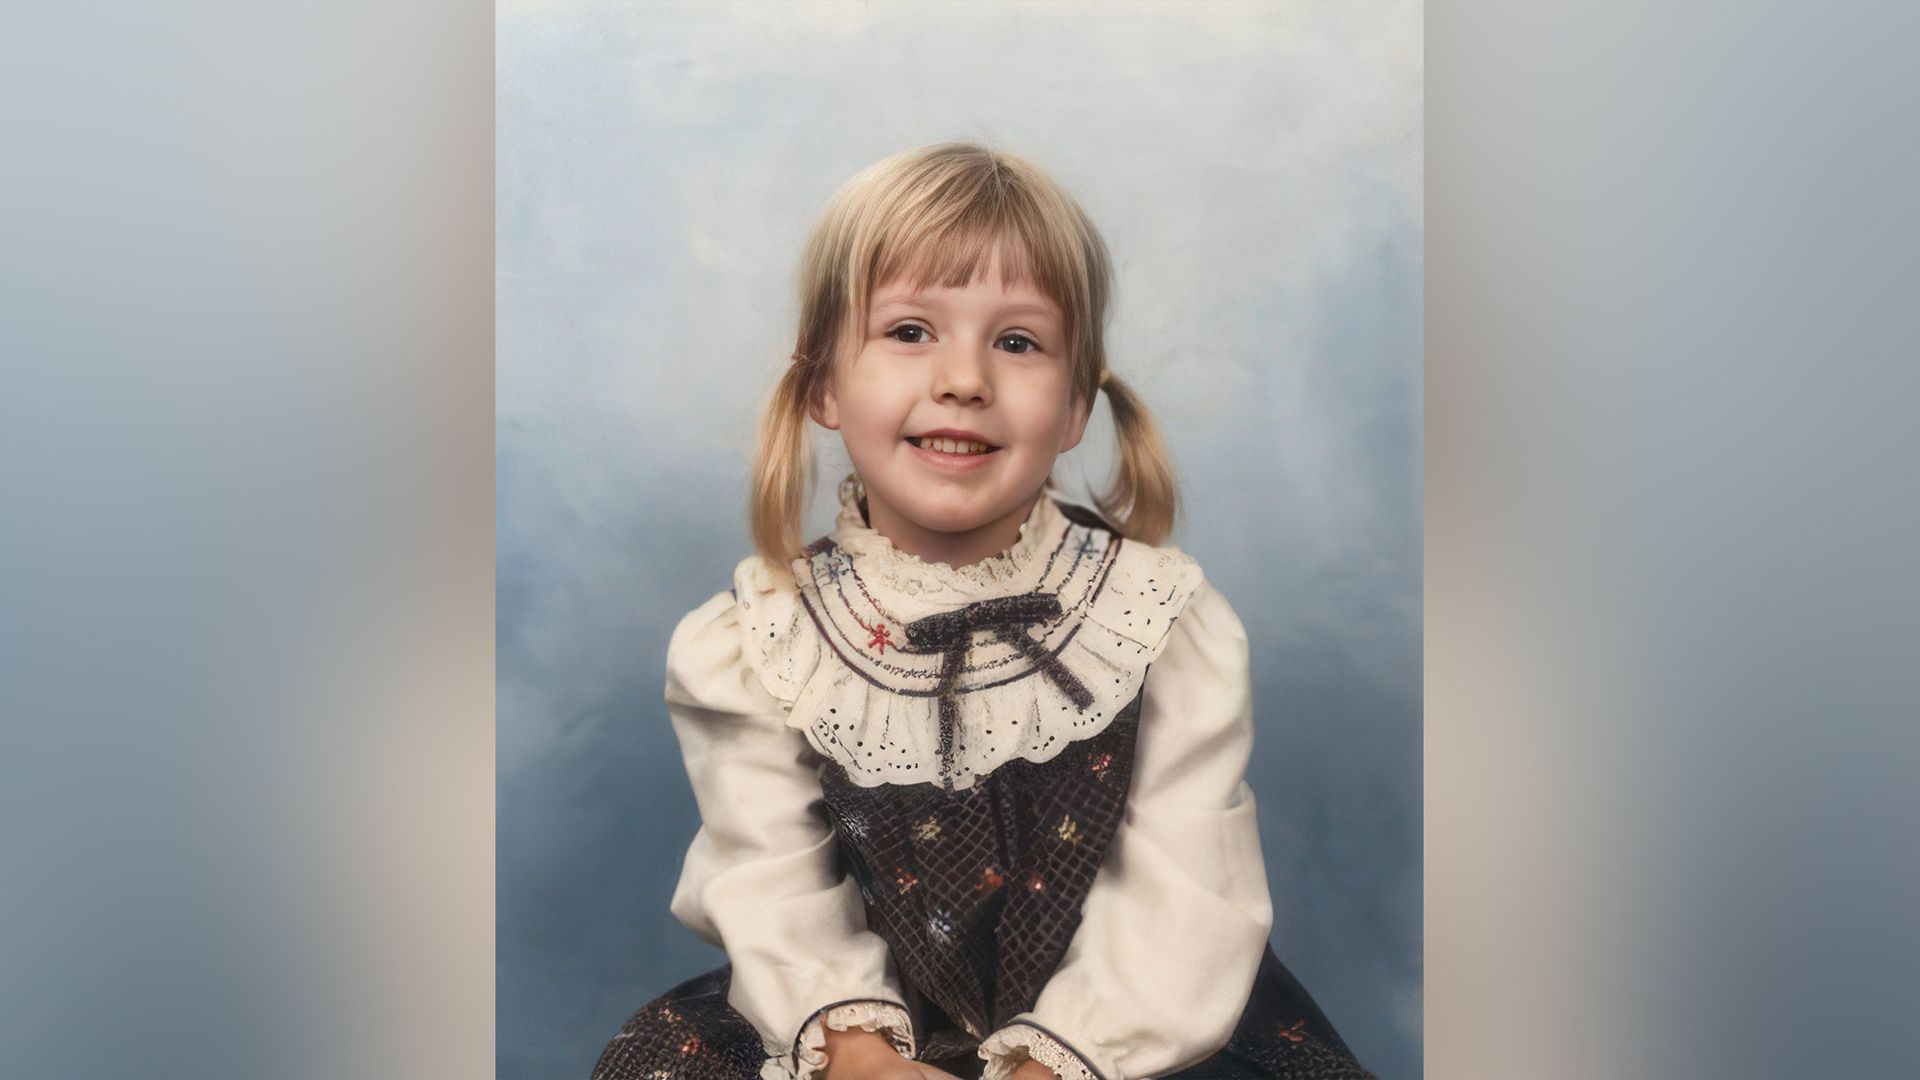 Christina Aguilera during her childhood years